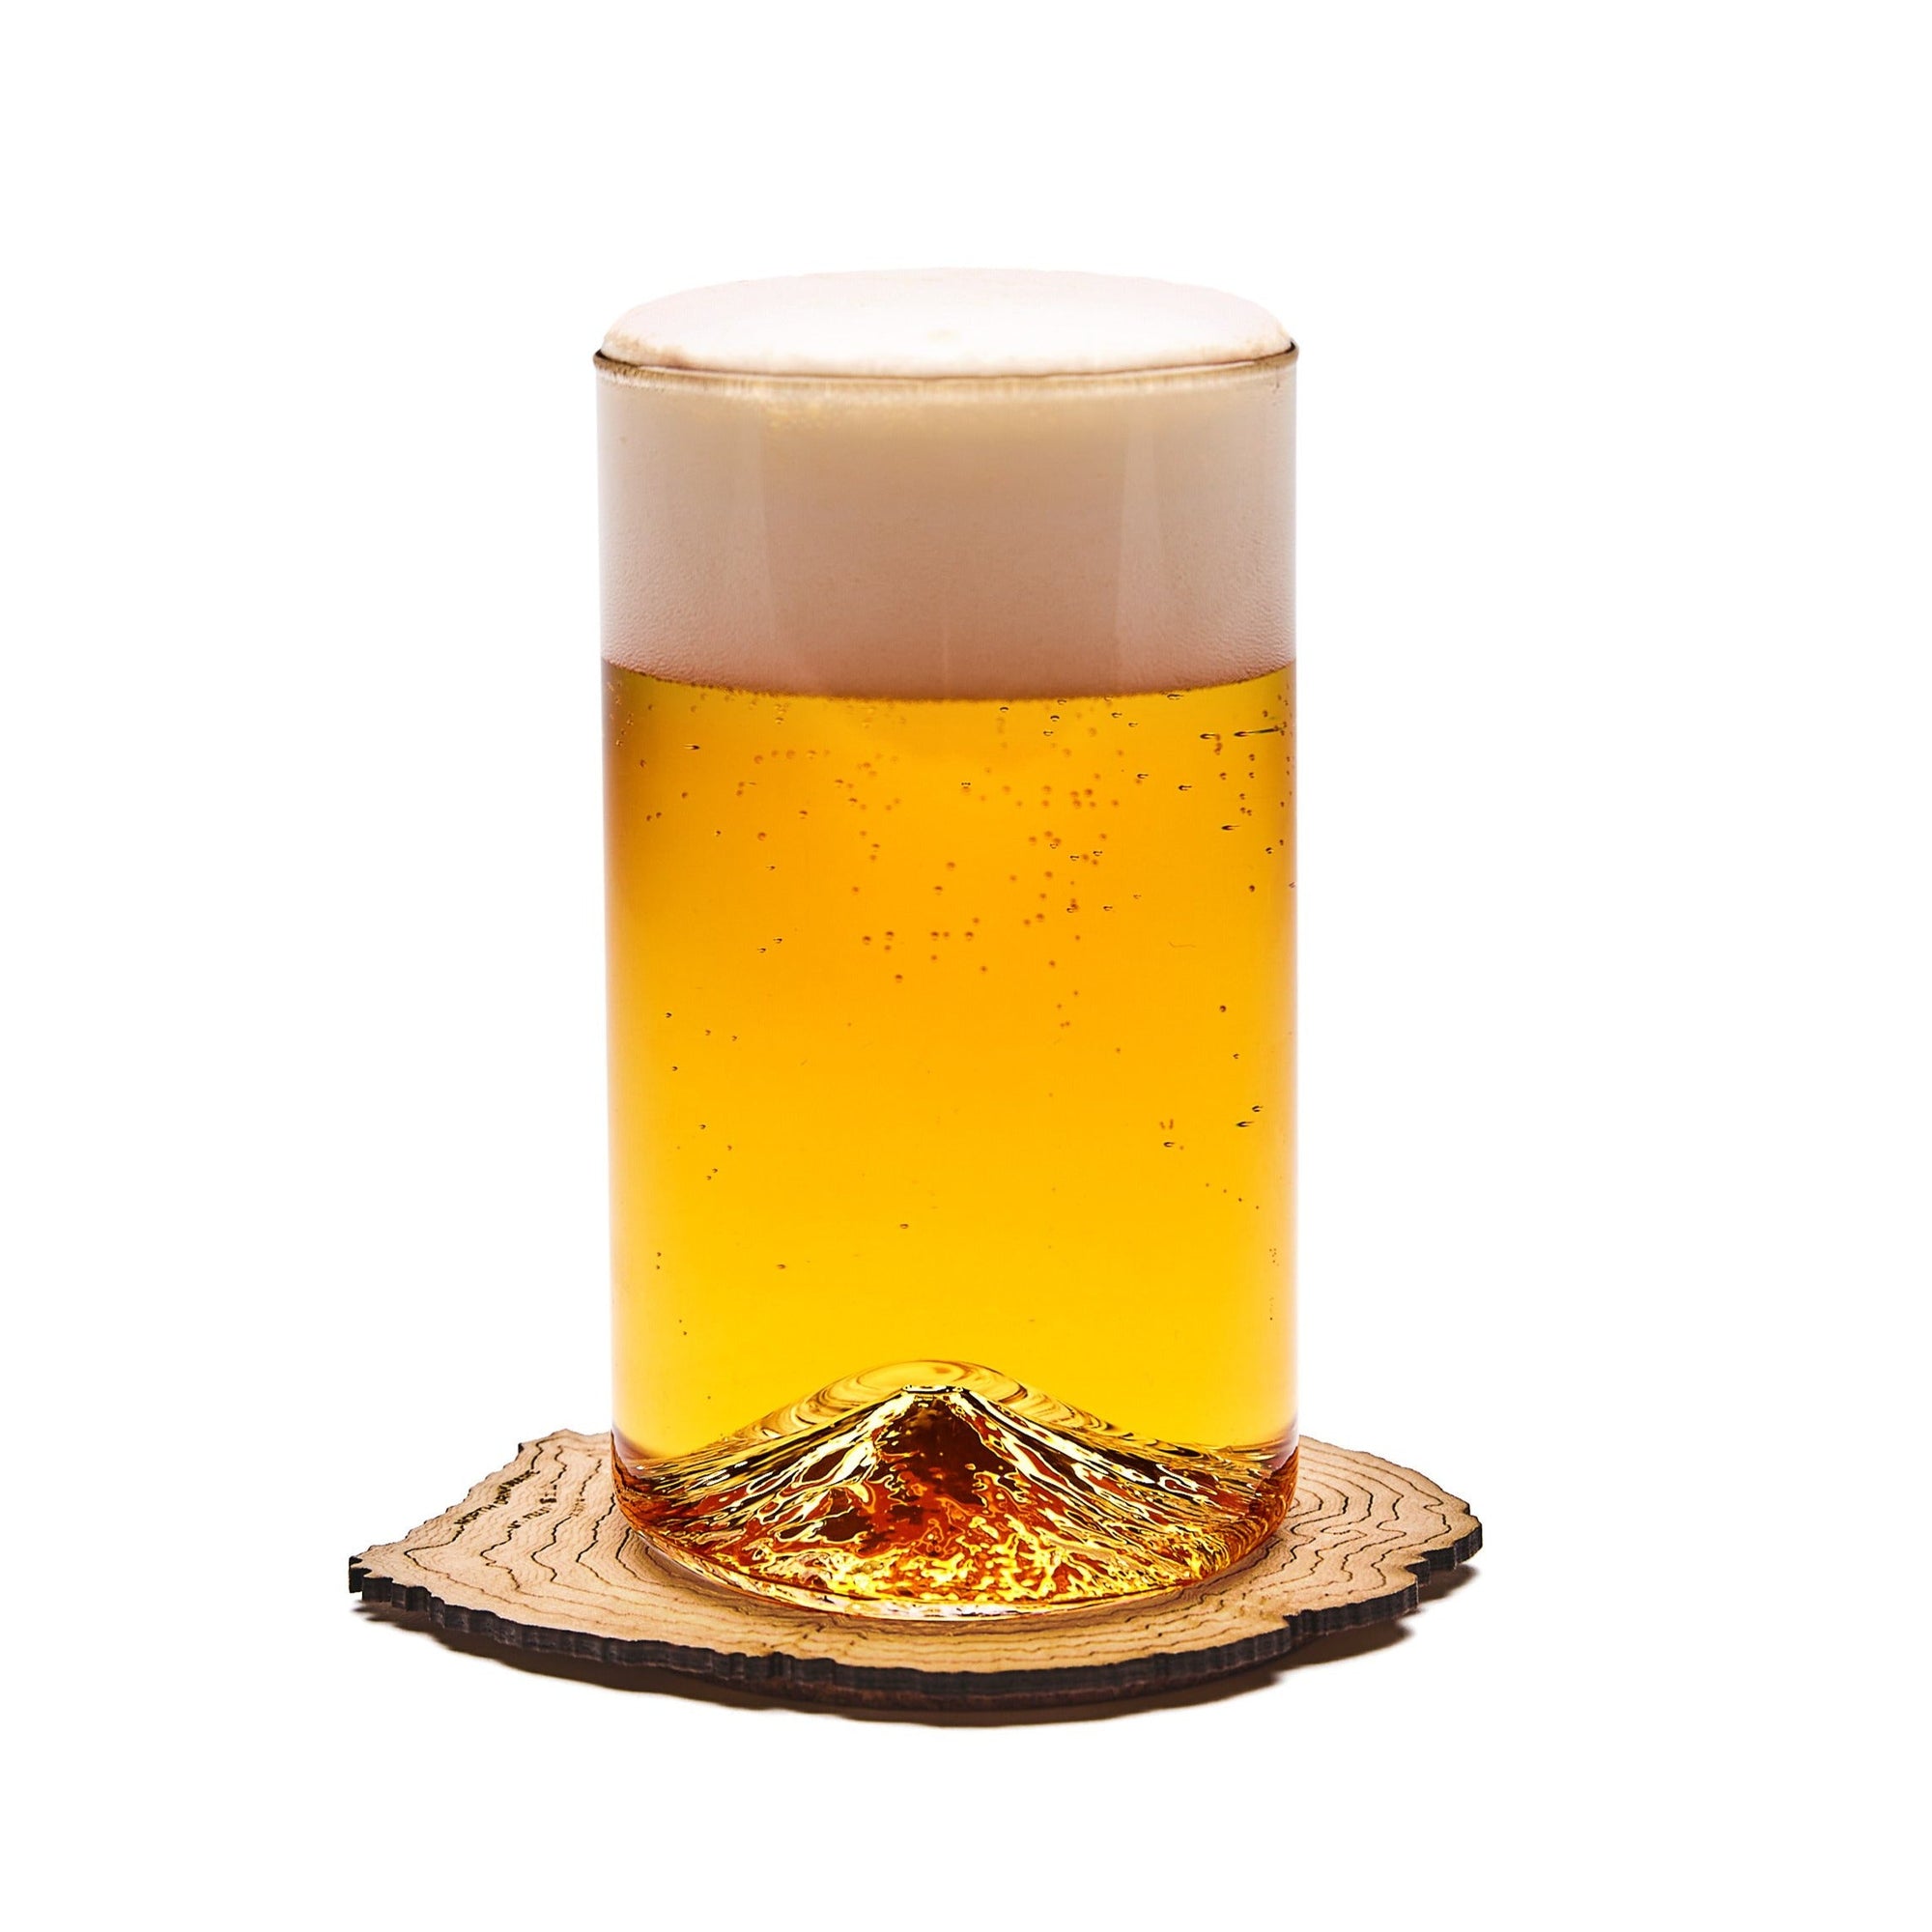 A small taste of Mt. Fuji - the Fujiyama Beer Glass